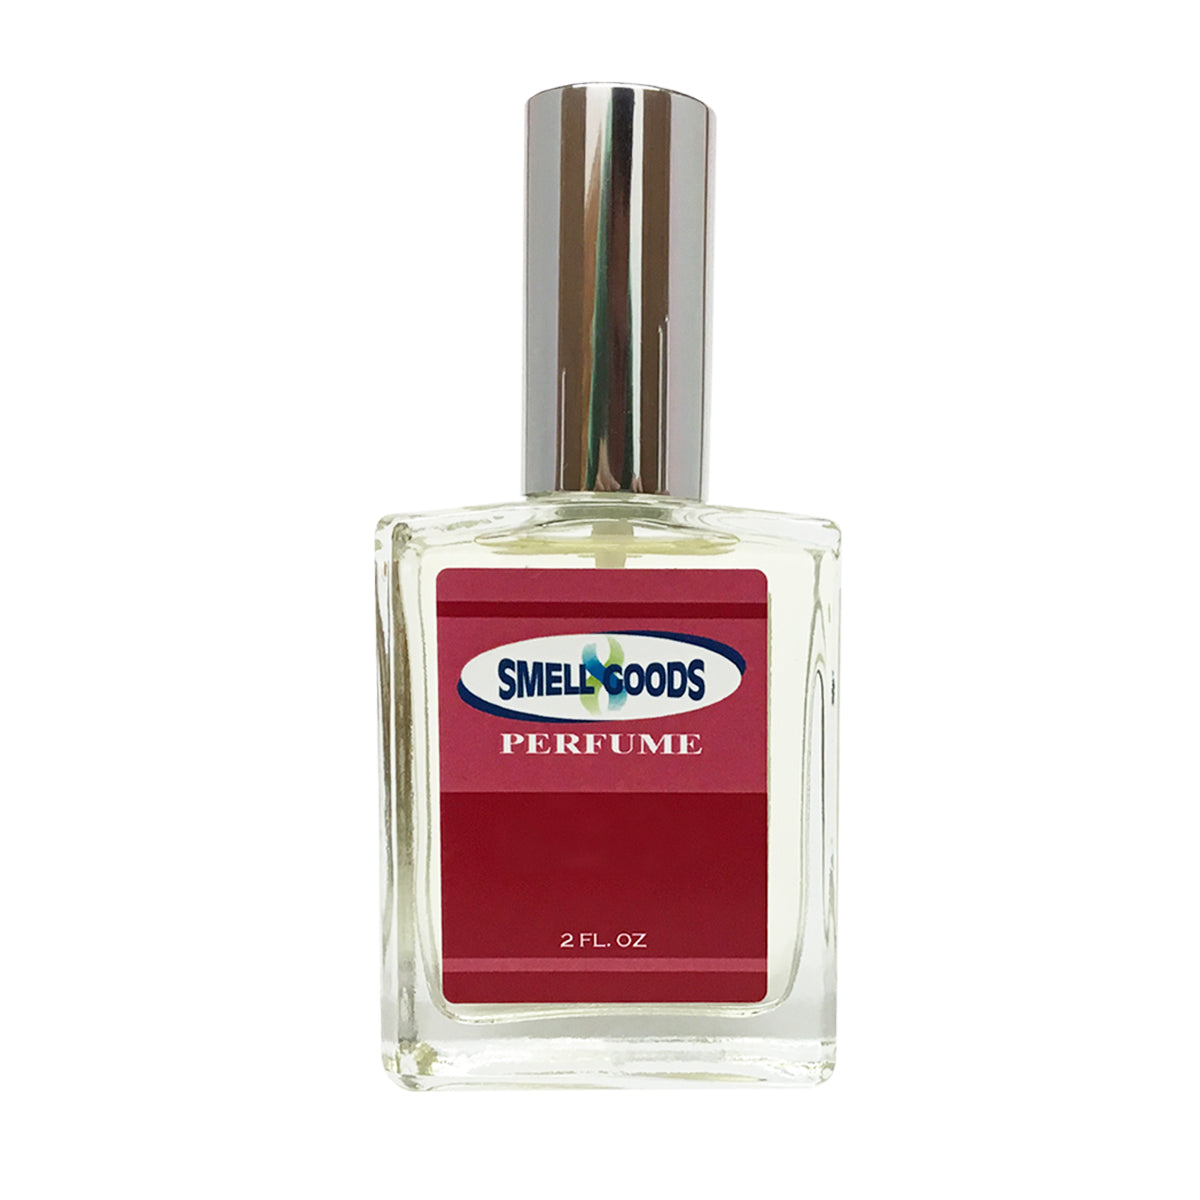 Chanel Chance Type (Women) Perfume Spray